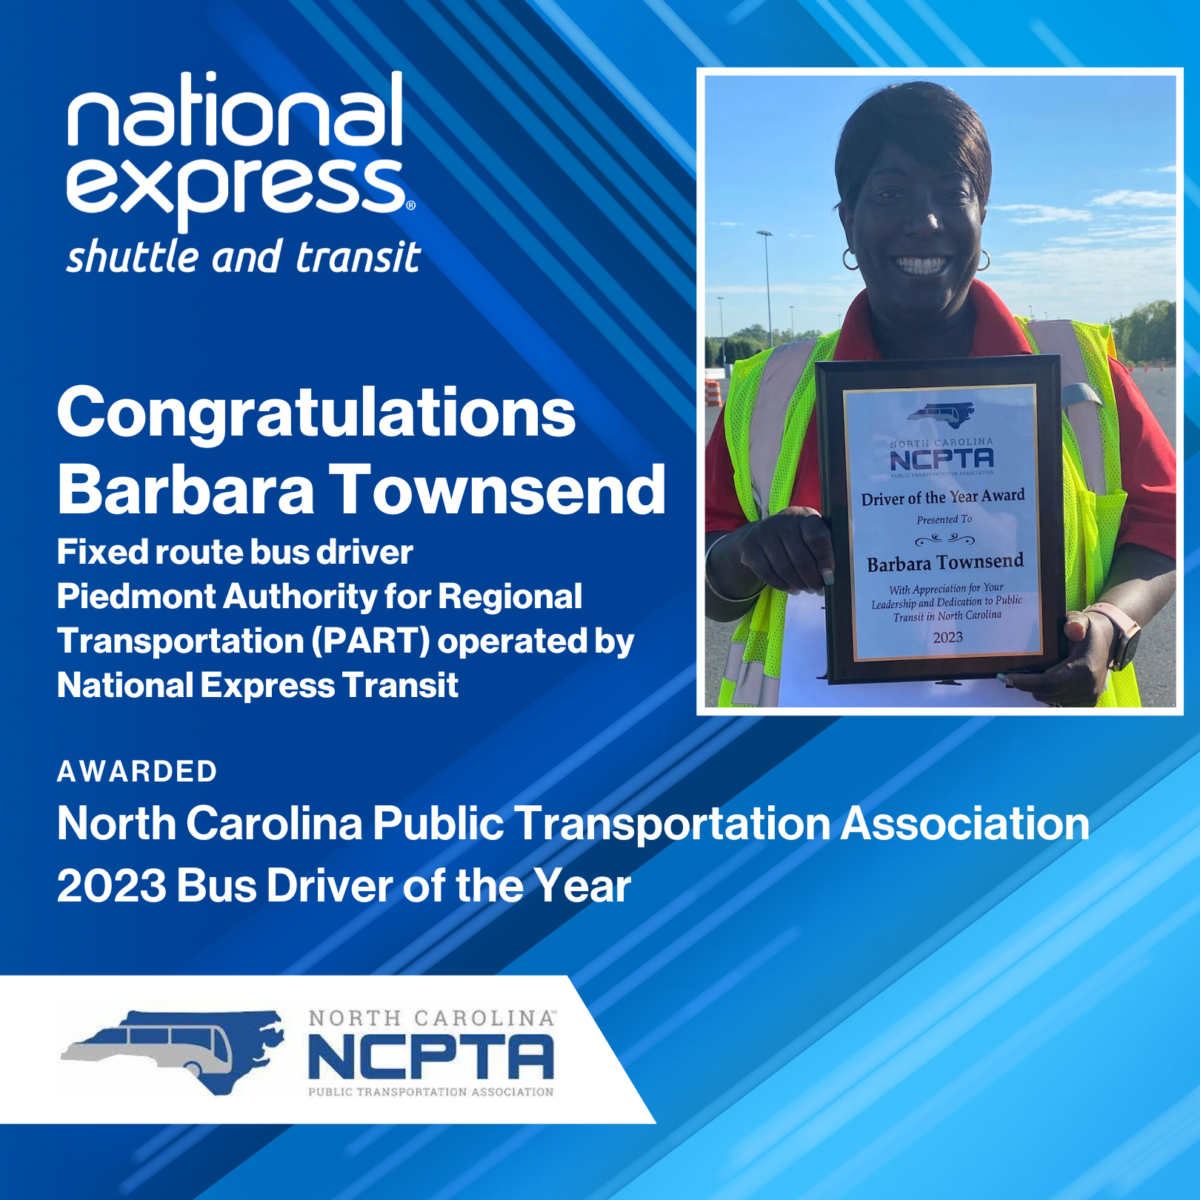 National Express Transit’s Barbara Townsend Named North Carolina Public Transportation Association 2023 Bus Driver of the Year